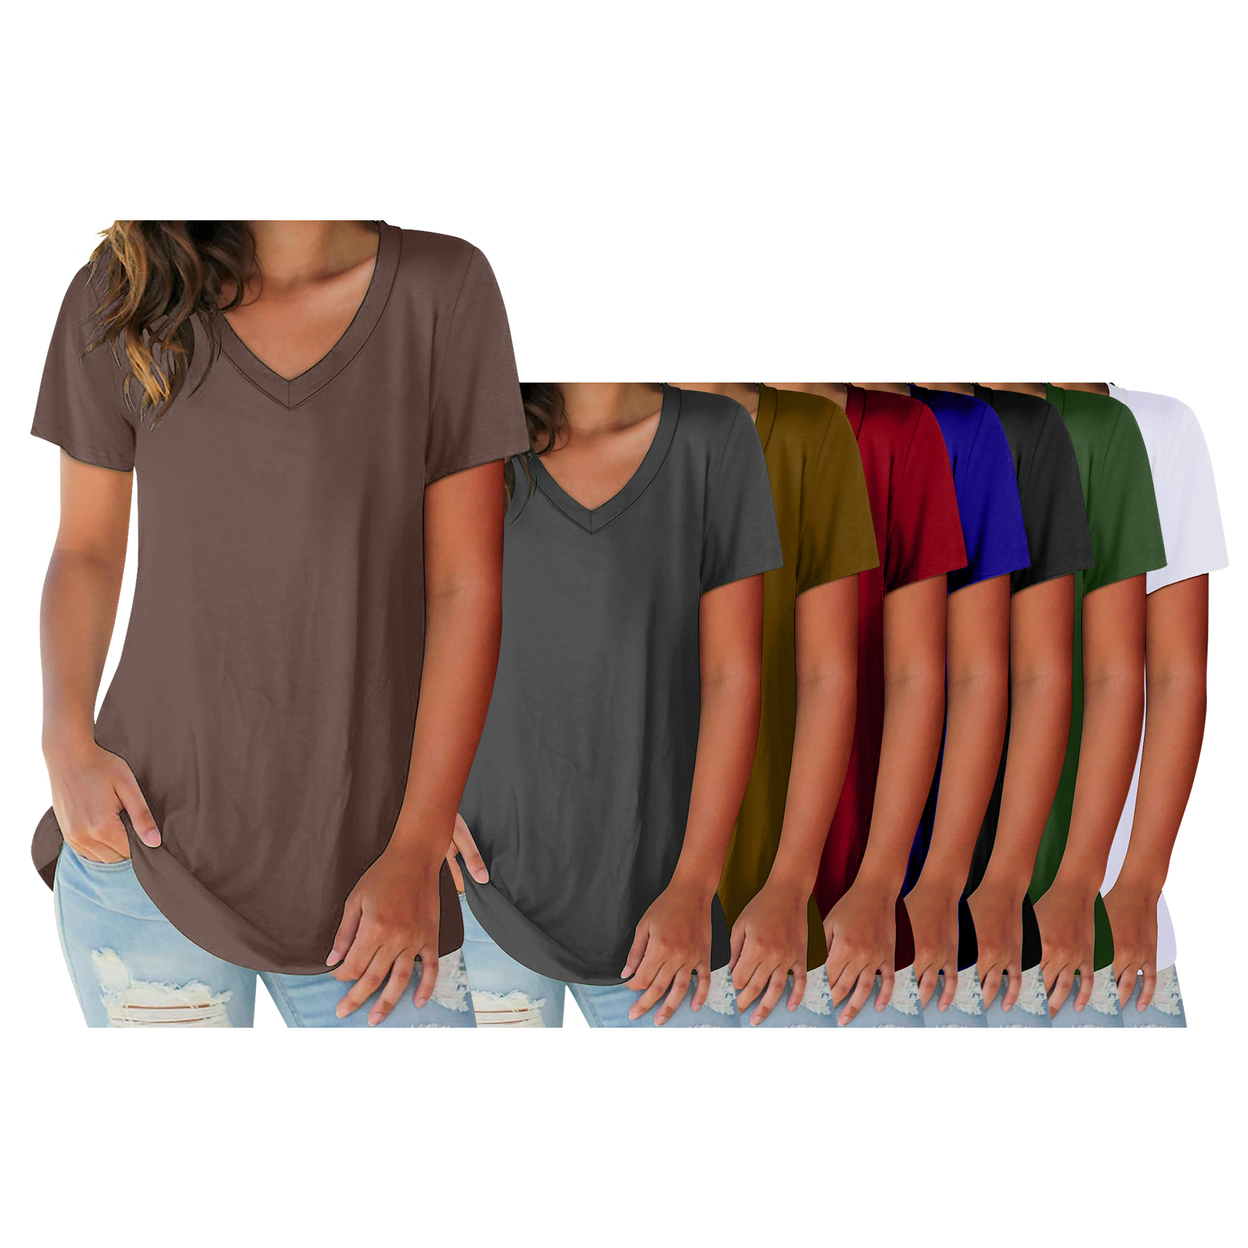 3-Pack: Women's Ultra Soft Smooth Cotton Blend Basic V-Neck Short Sleeve Shirts - Black Navy, Red, X-large